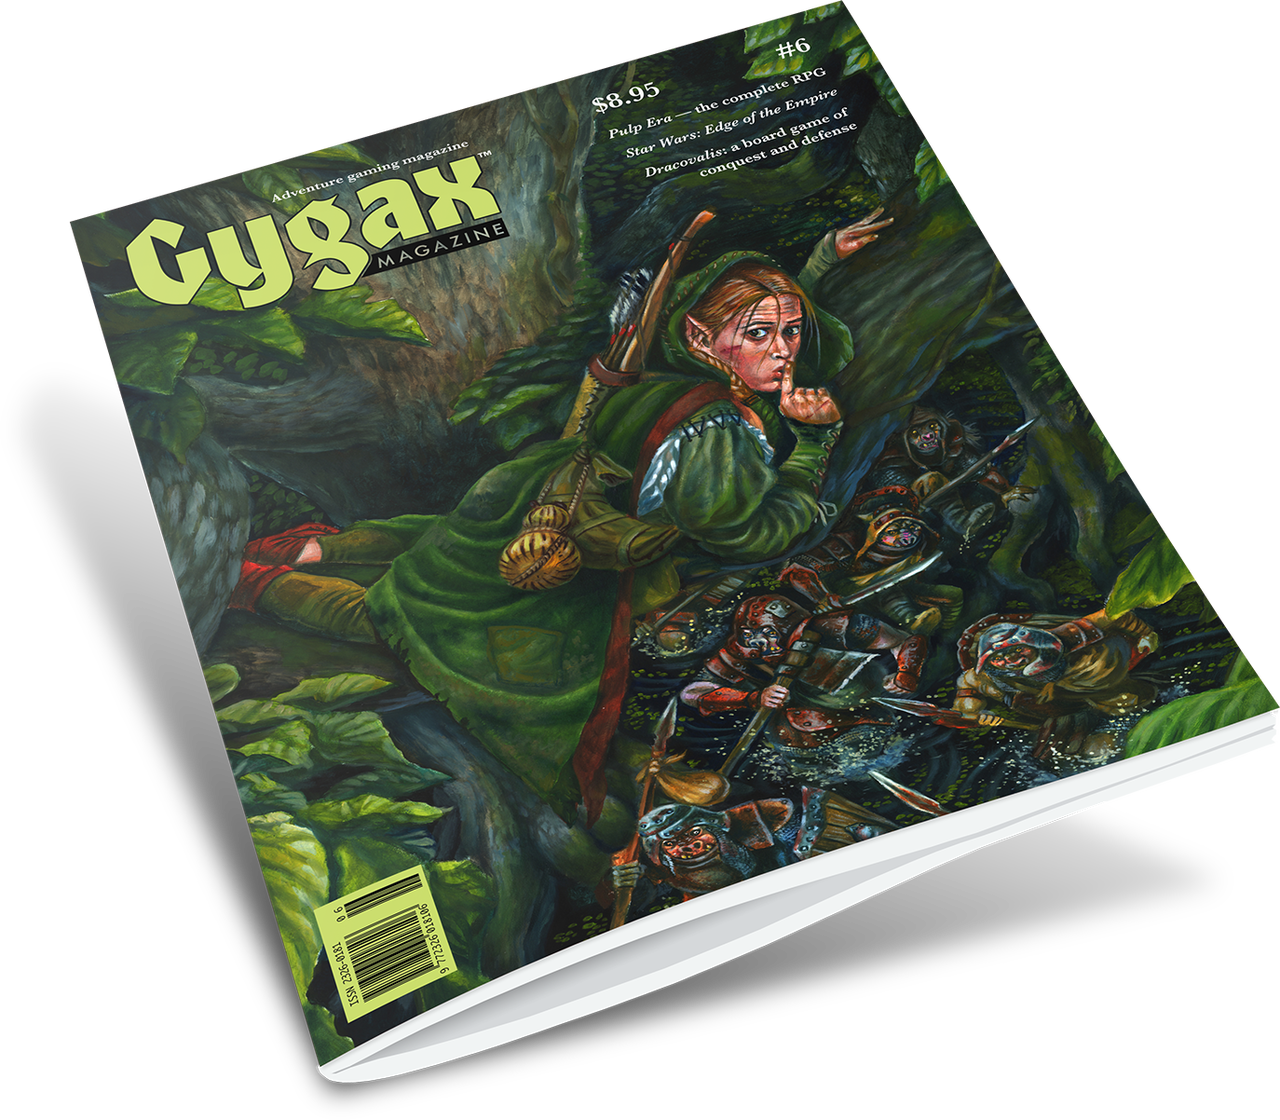 Gygax Magazine #6